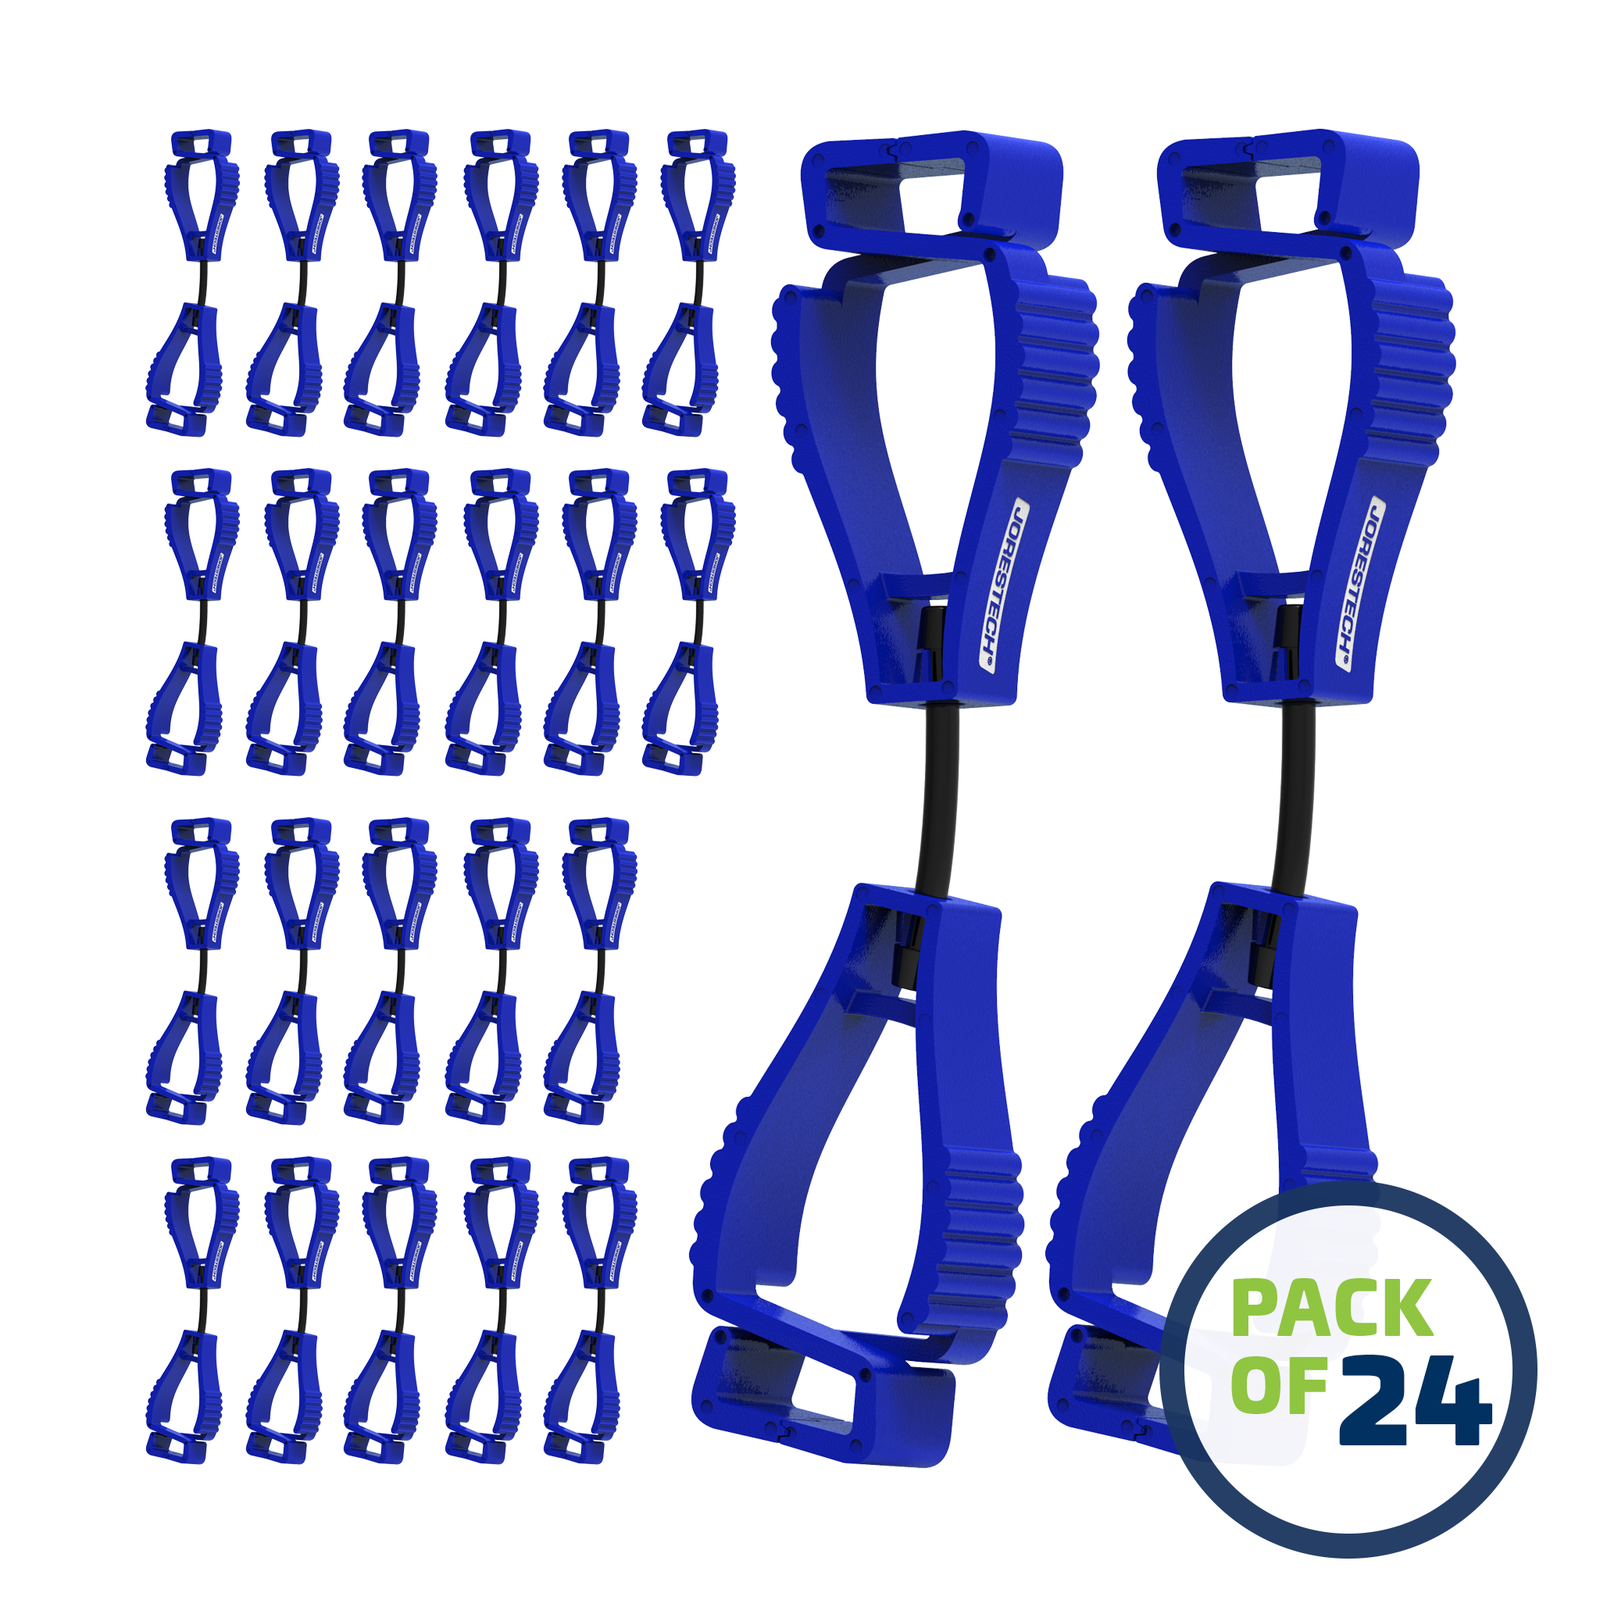 Pack of 24 Blue JORESTECH glove clip safety holders 